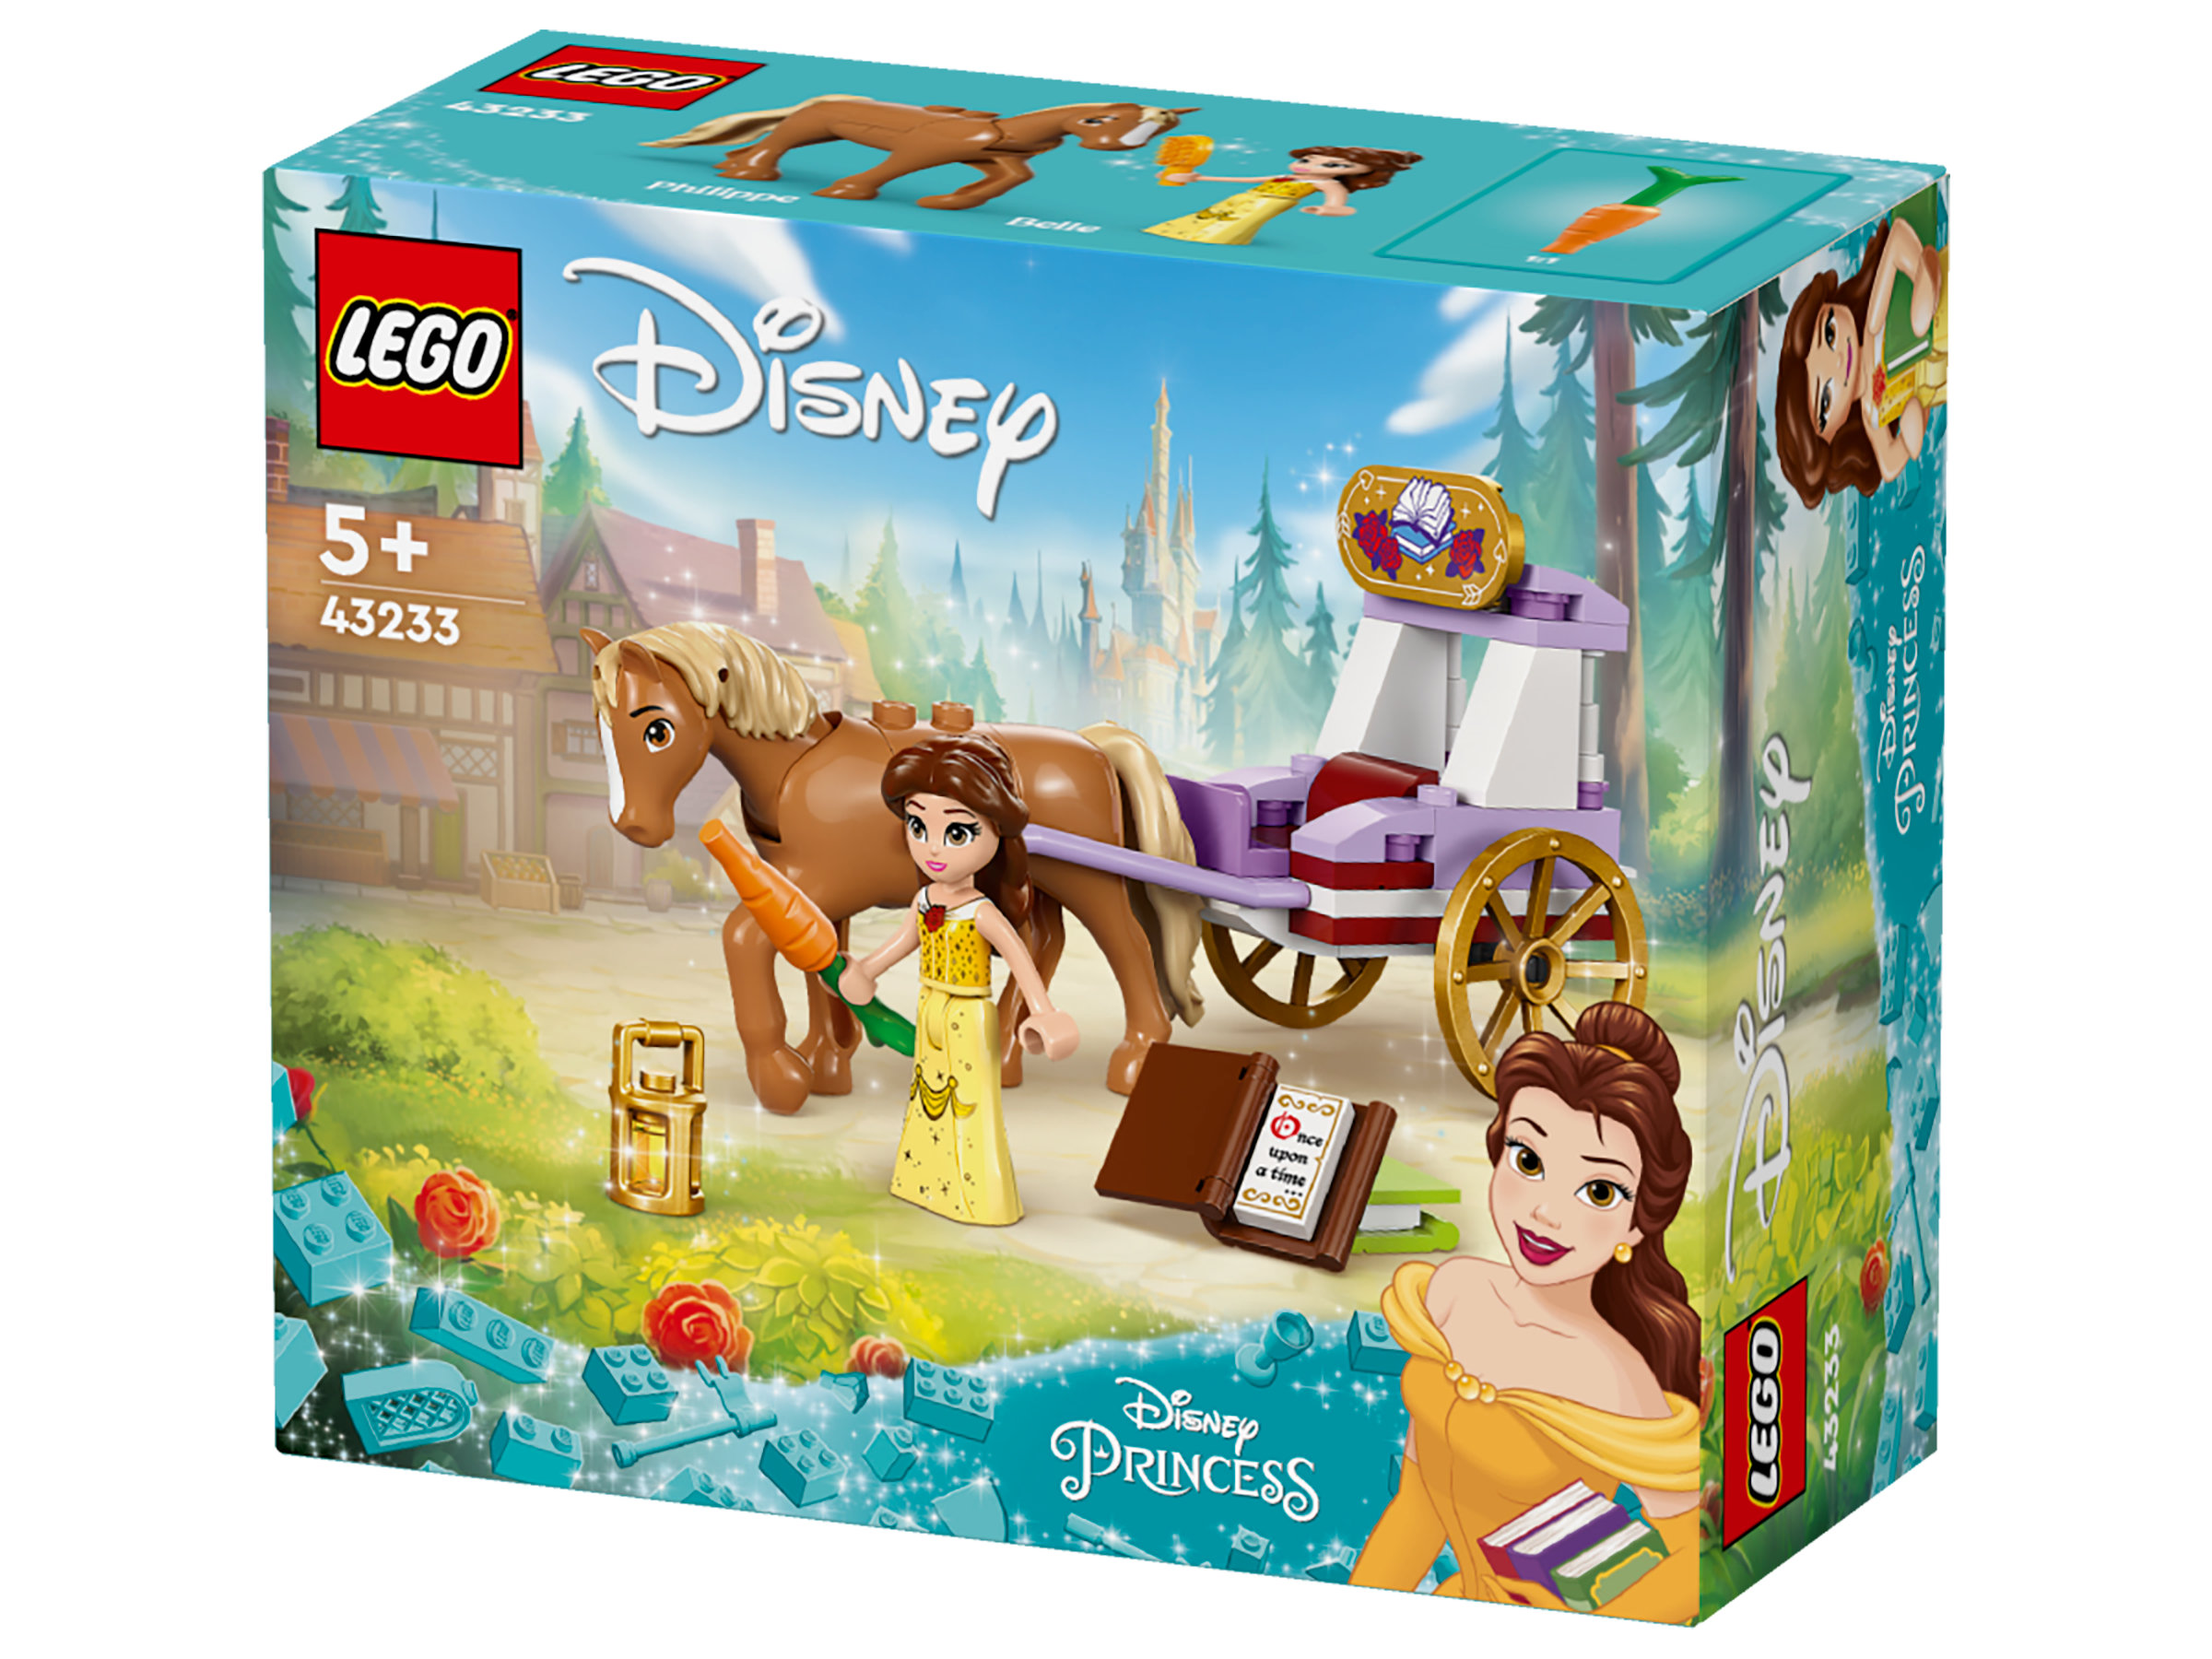 Lego 43233 Belles Storytime Horse Carraige